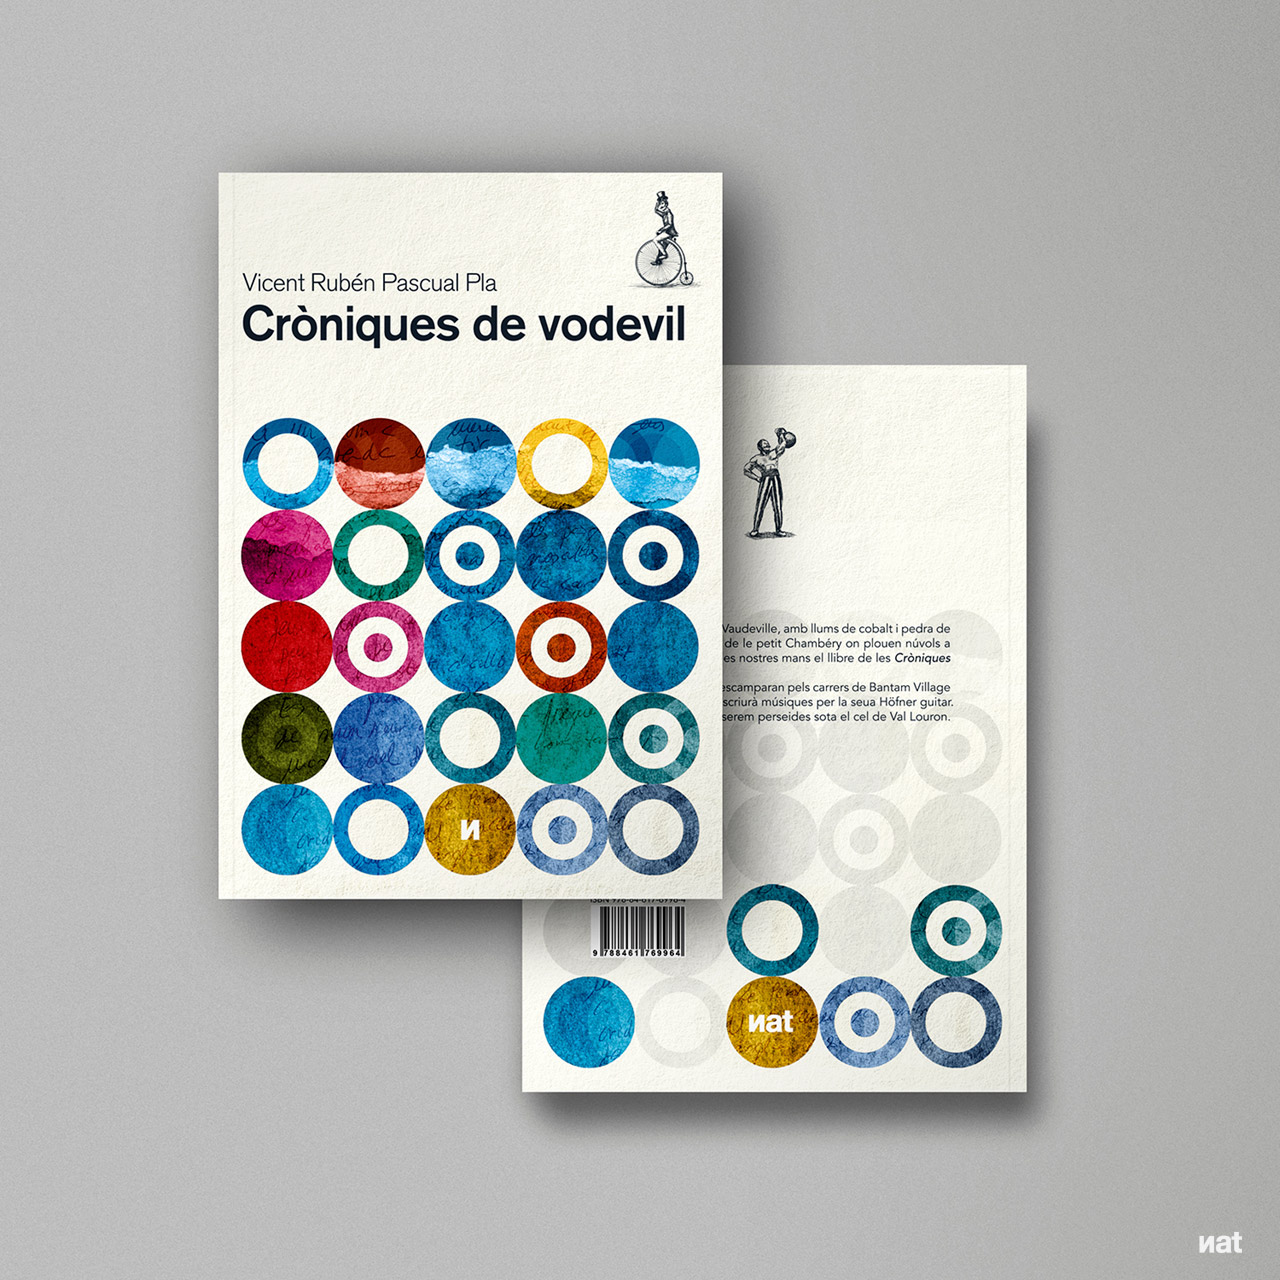 Diseño editorial realizado por Nat Estudi para el libro 'Cròniques de Vodevil'.